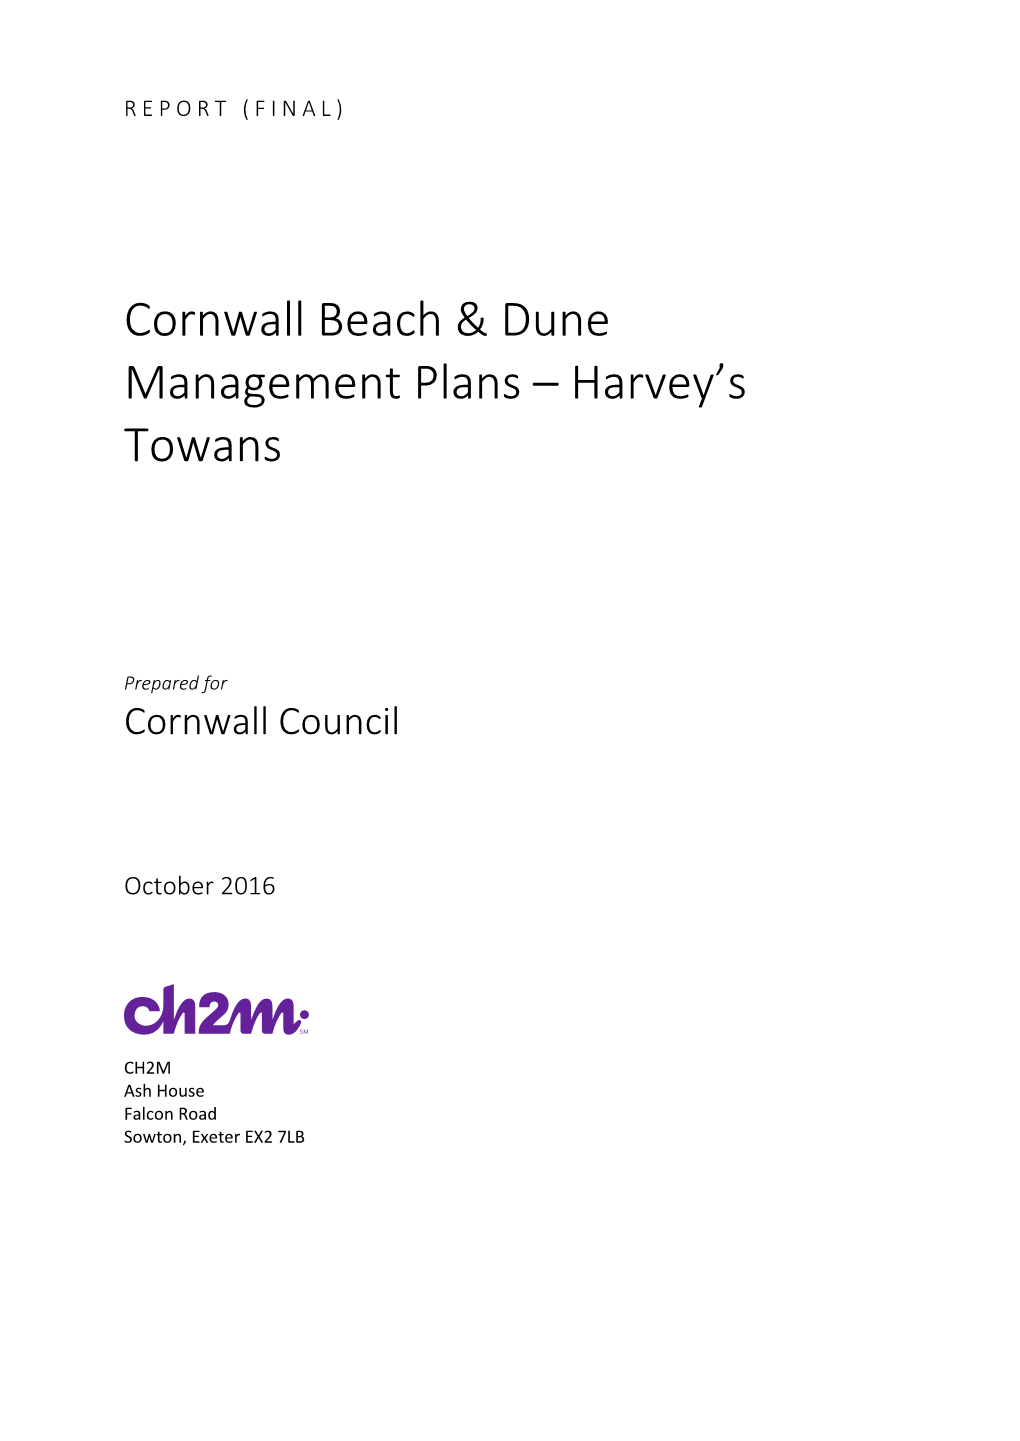 Cornwall Beach & Dune Management Plans – Harvey's Towans